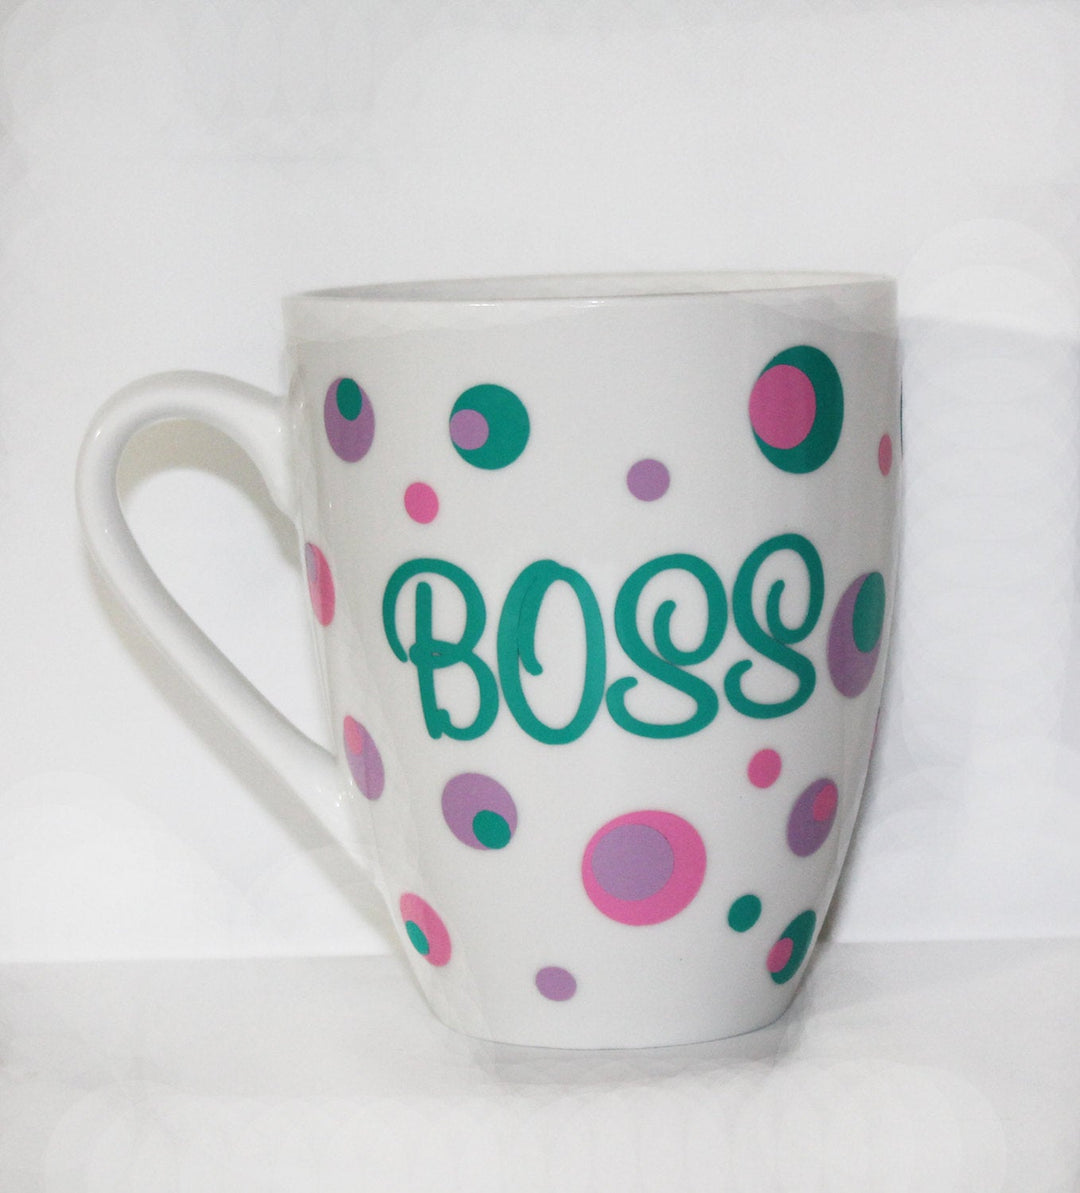 Boss" Ceramic Mug - Gift - Birthday - Mom - Thank You - Coffee - Tea - Hot Beverage - Husband - Wife - Friend - Workplace